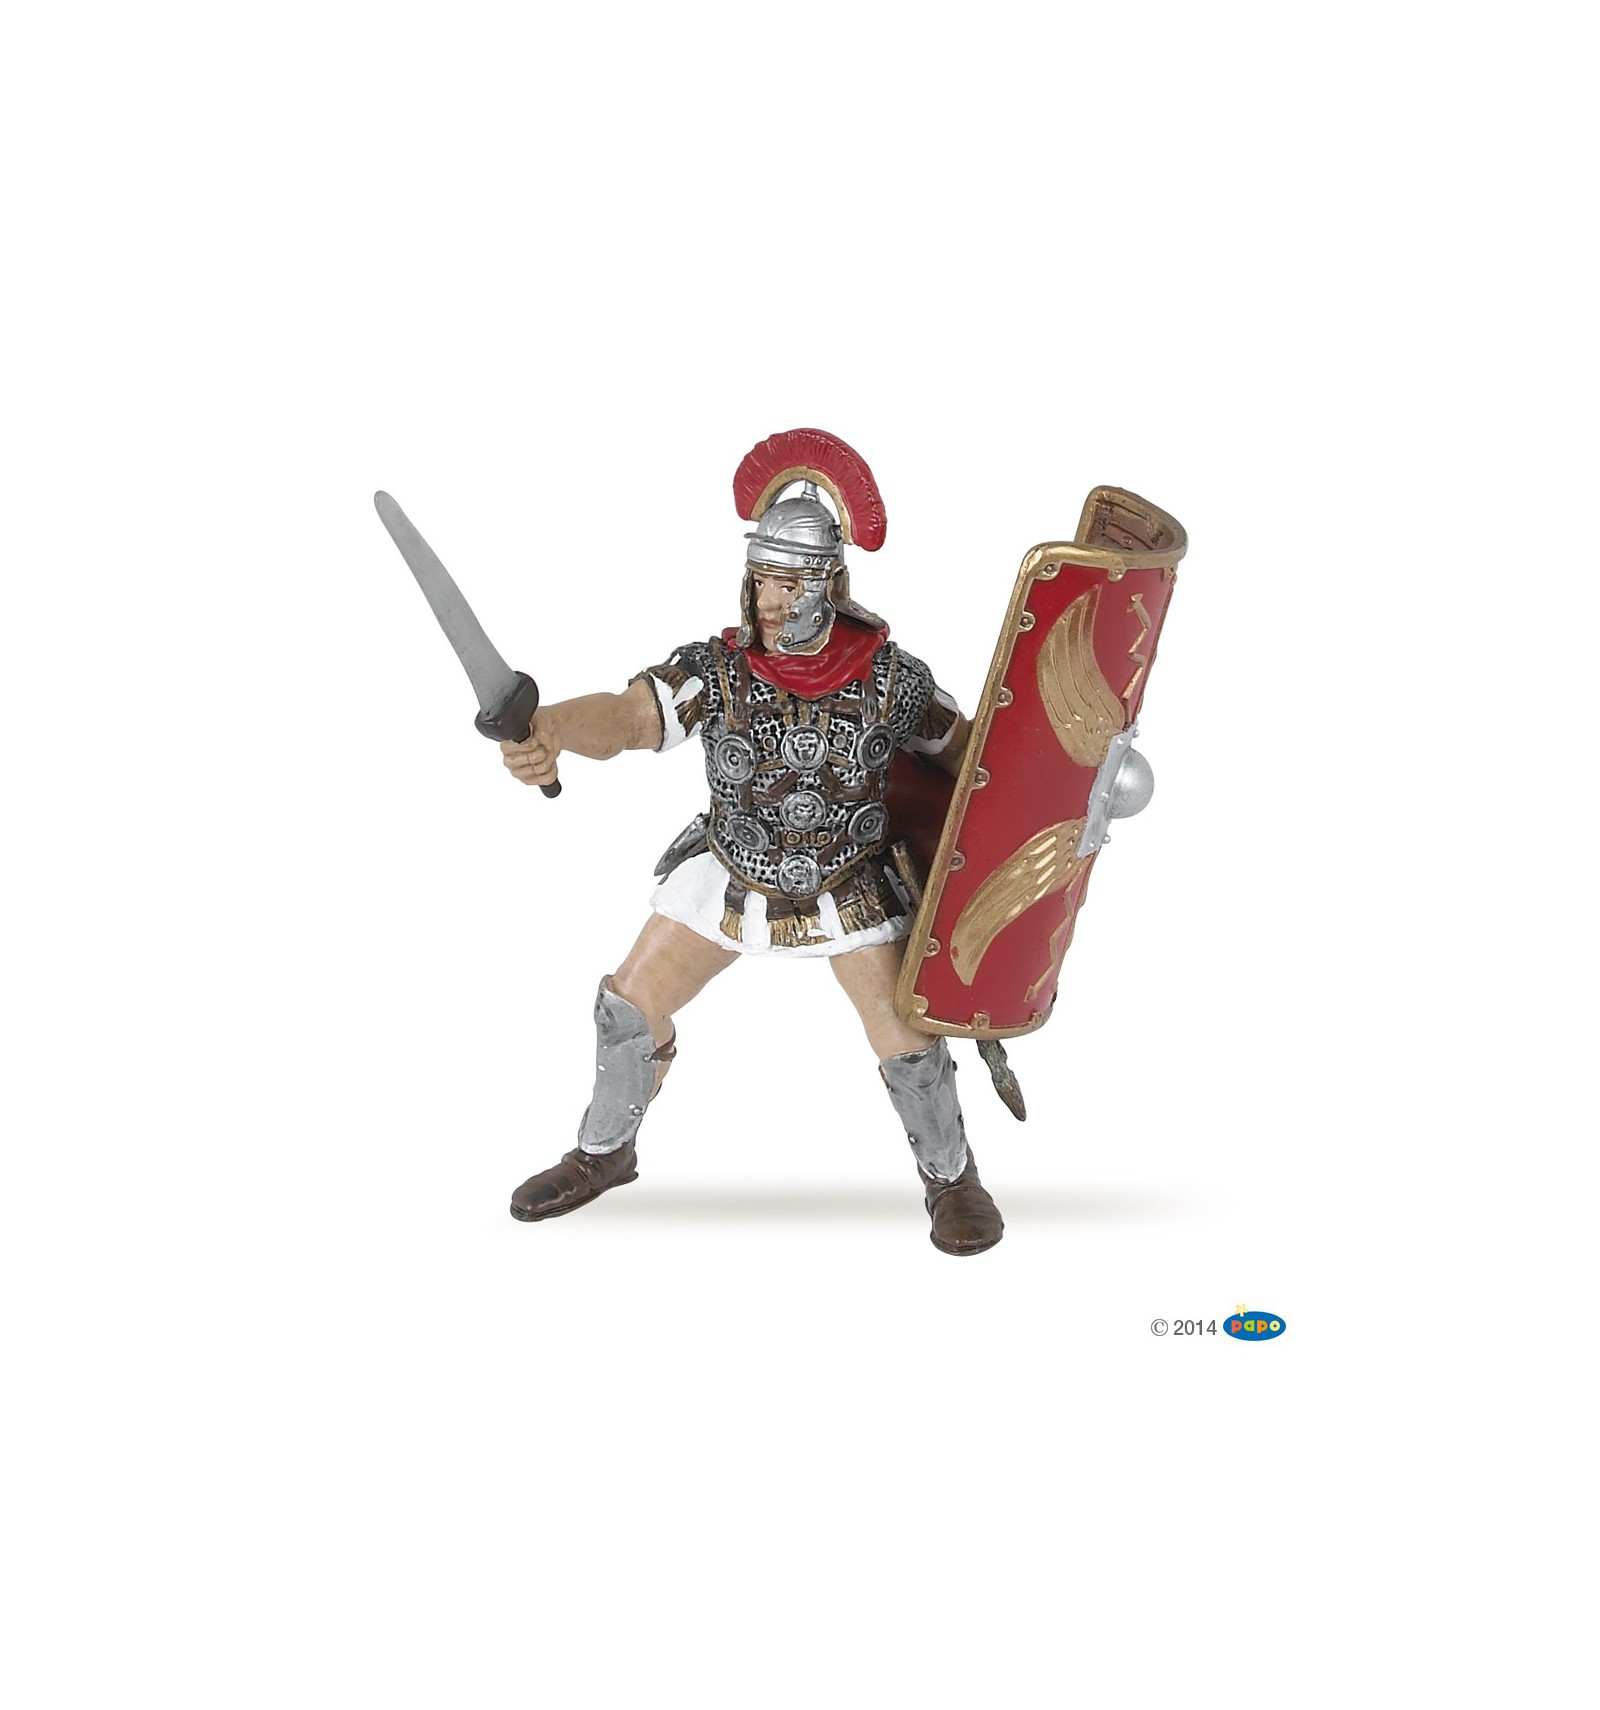 roman centurion